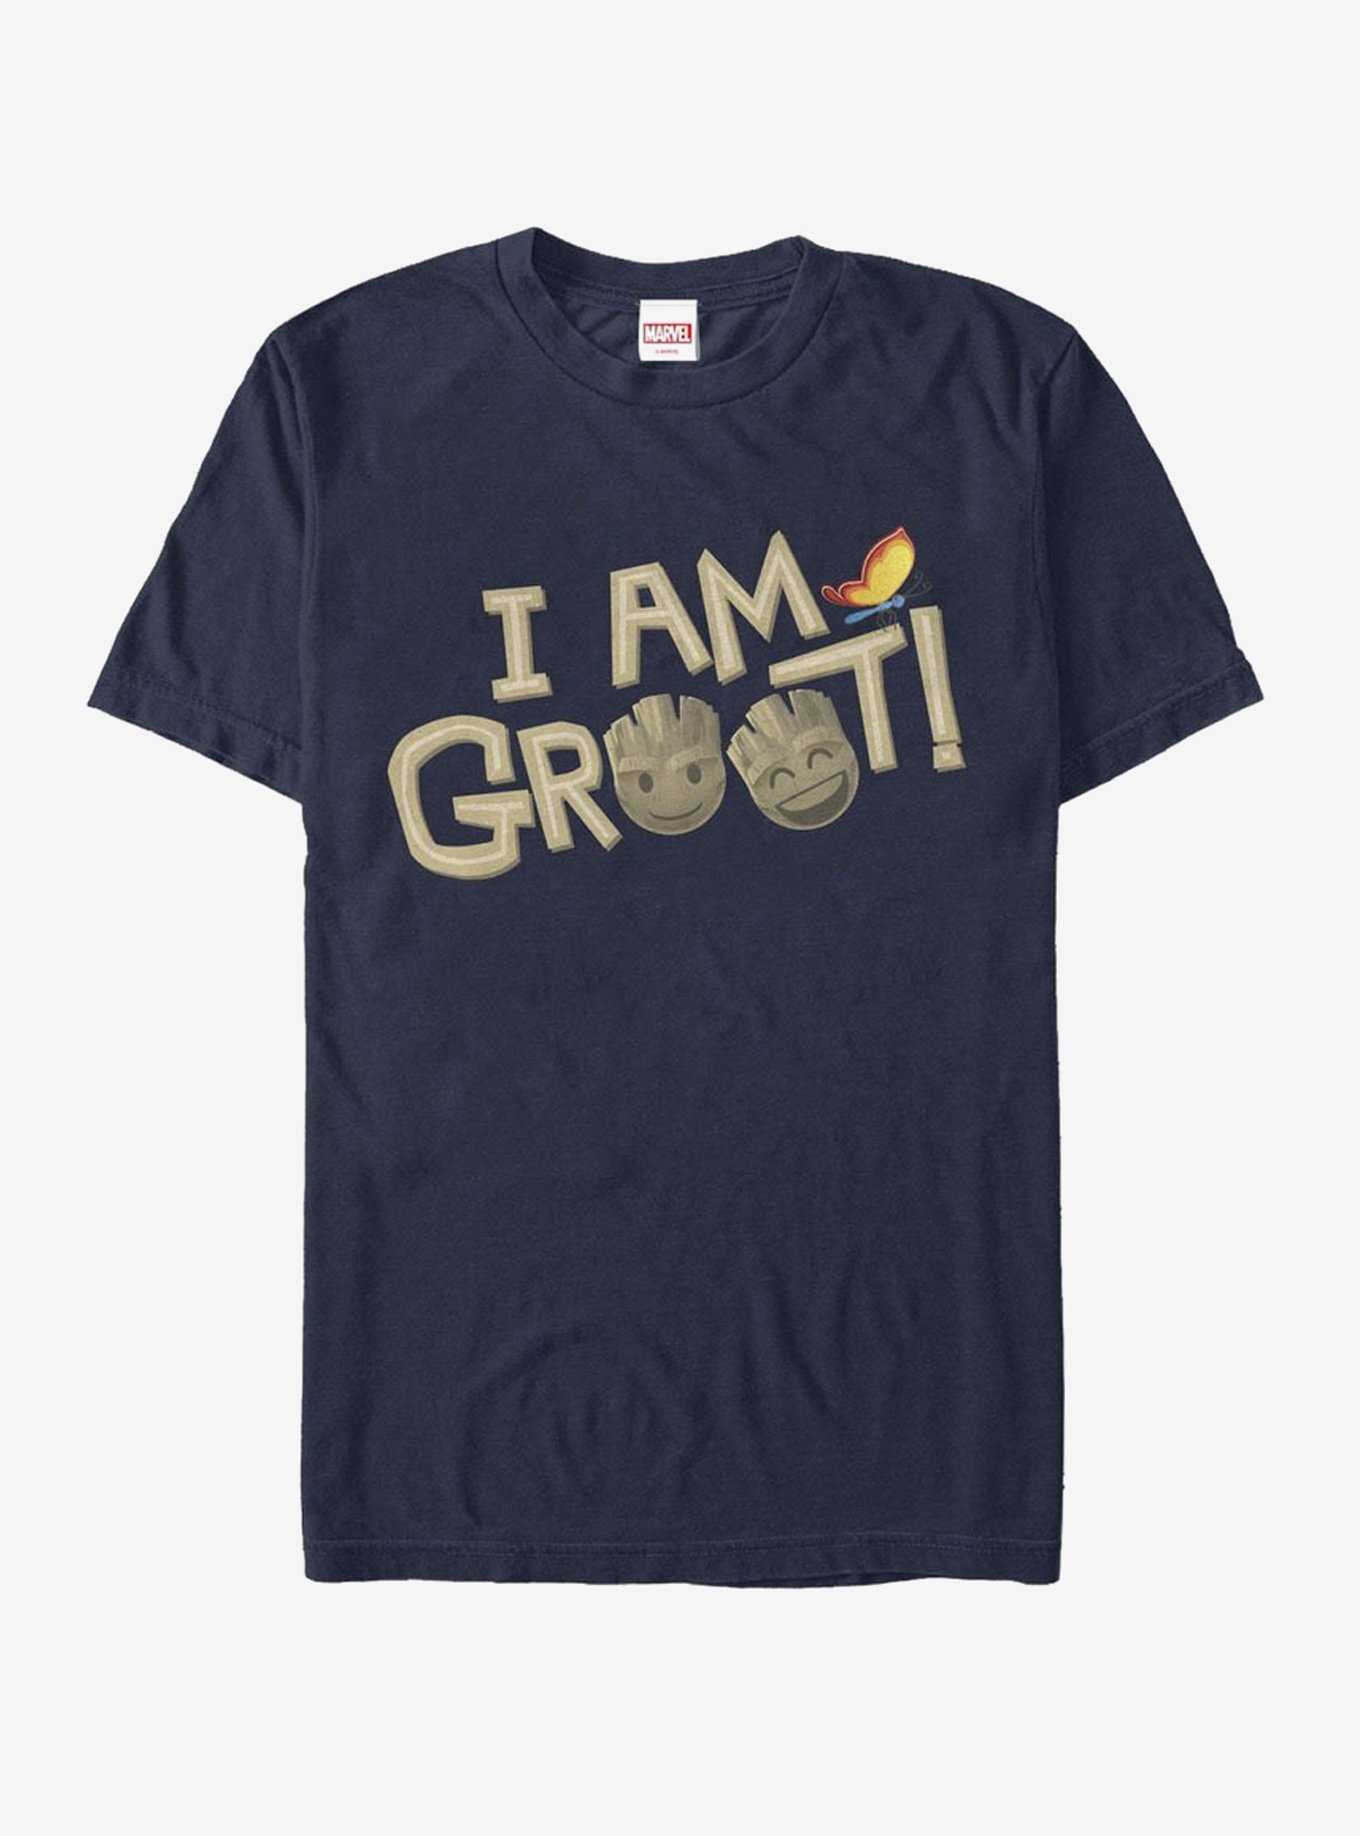 Marvel Guardians of the Galaxy Groot Emoji T-Shirt, , hi-res